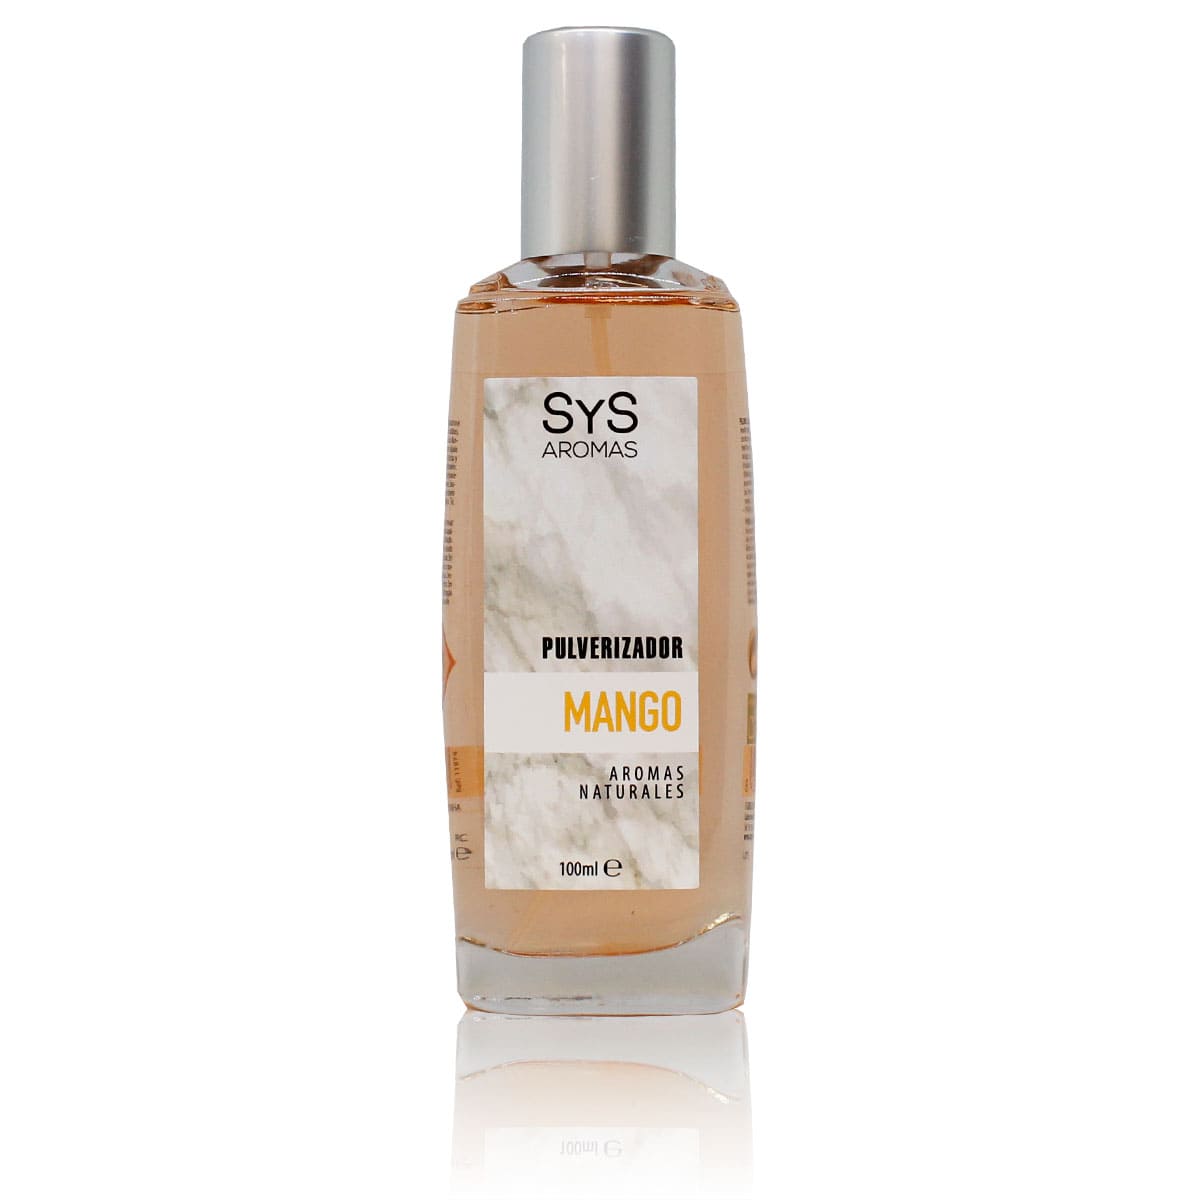 Buy Mango Spray Air Freshener 100ml SYS Aromas